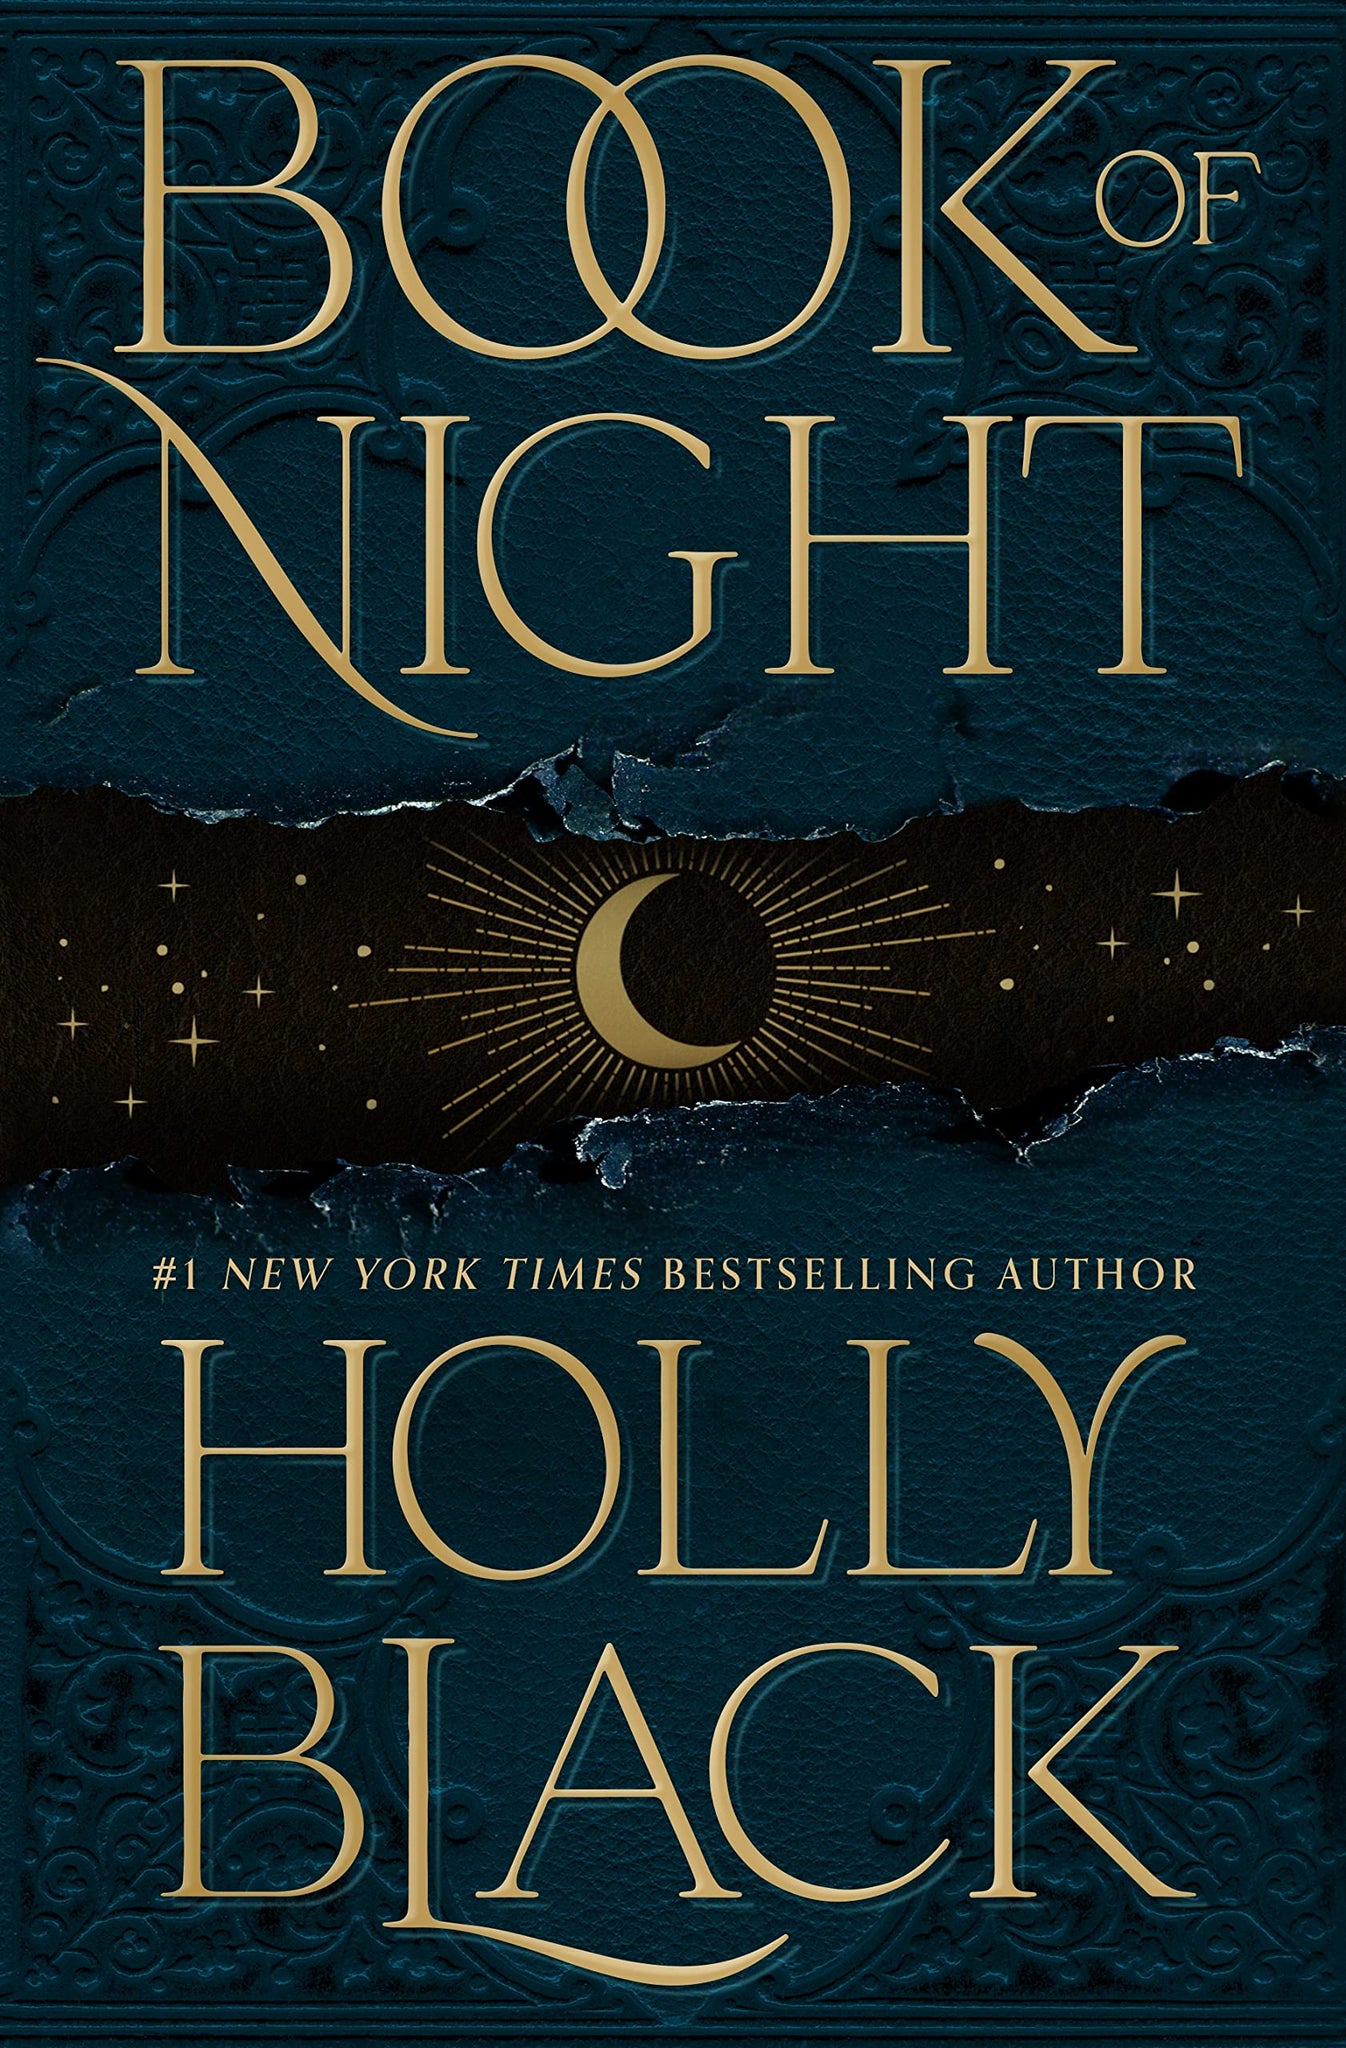 Book of Night by Holly Black - hardcvr